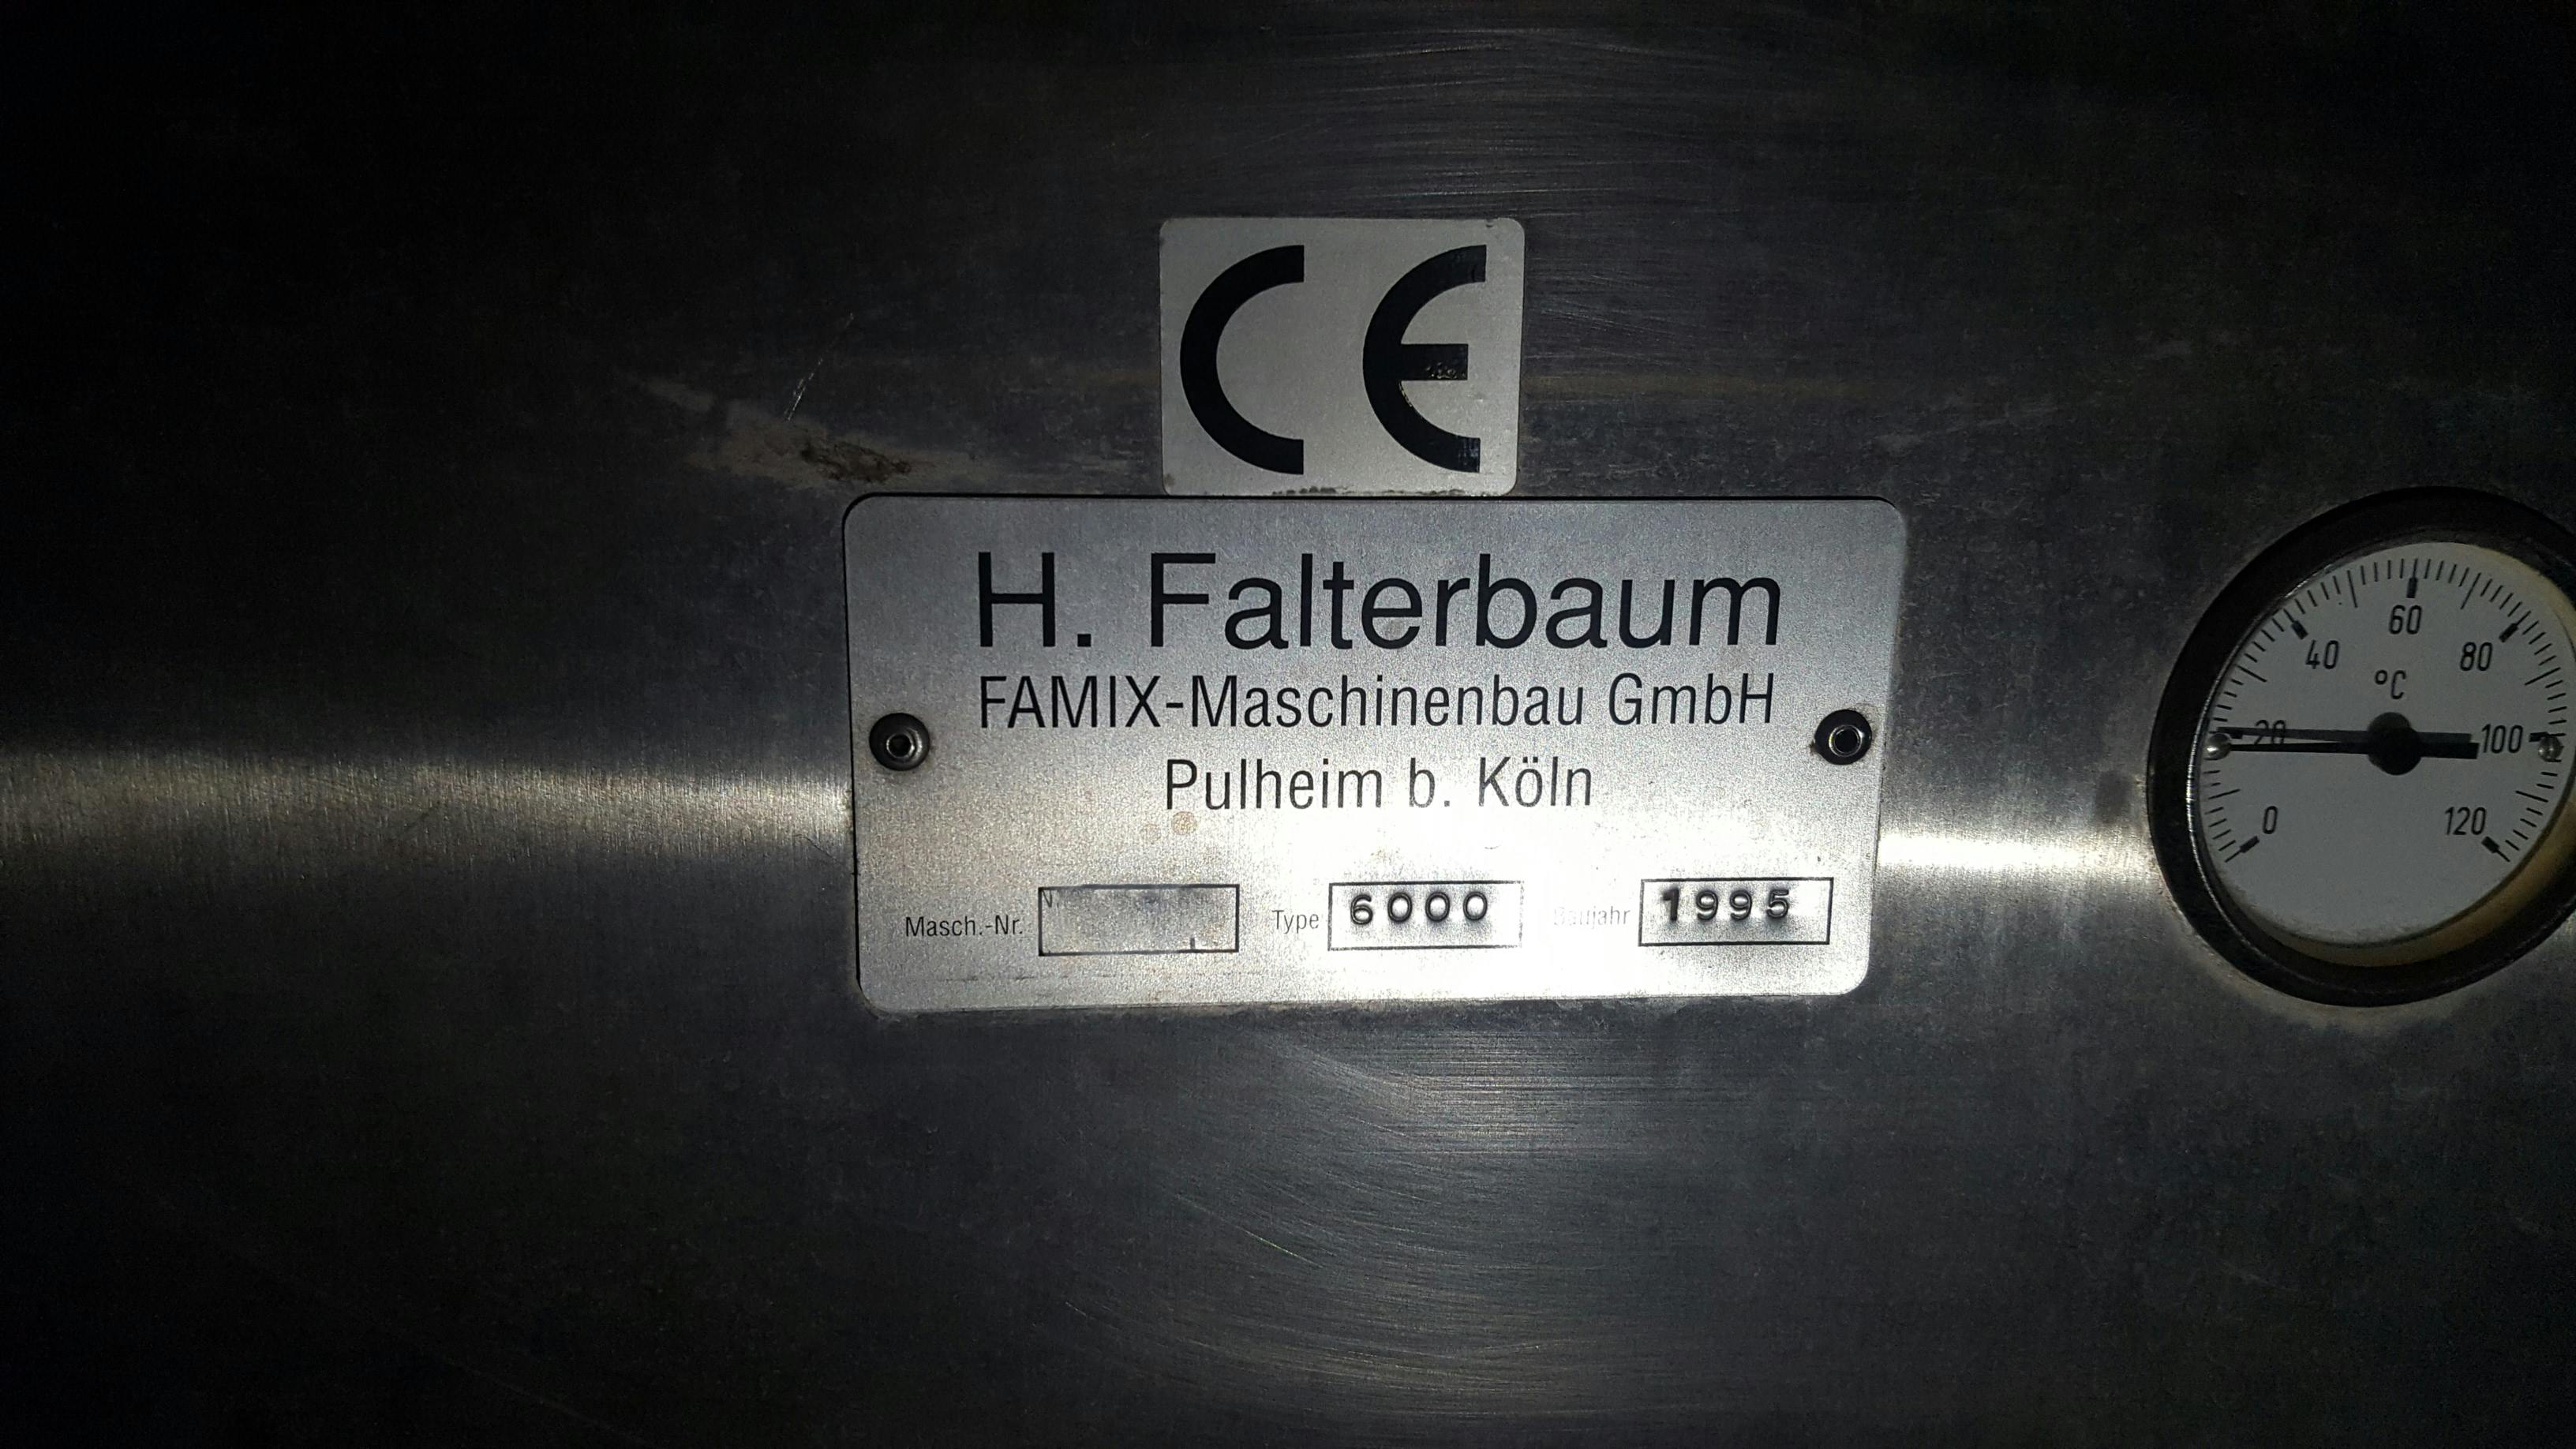 Plaque signalétique of H. FALTERBAUM FAMIX-MASCHINENBAU GMBH Famix 6000